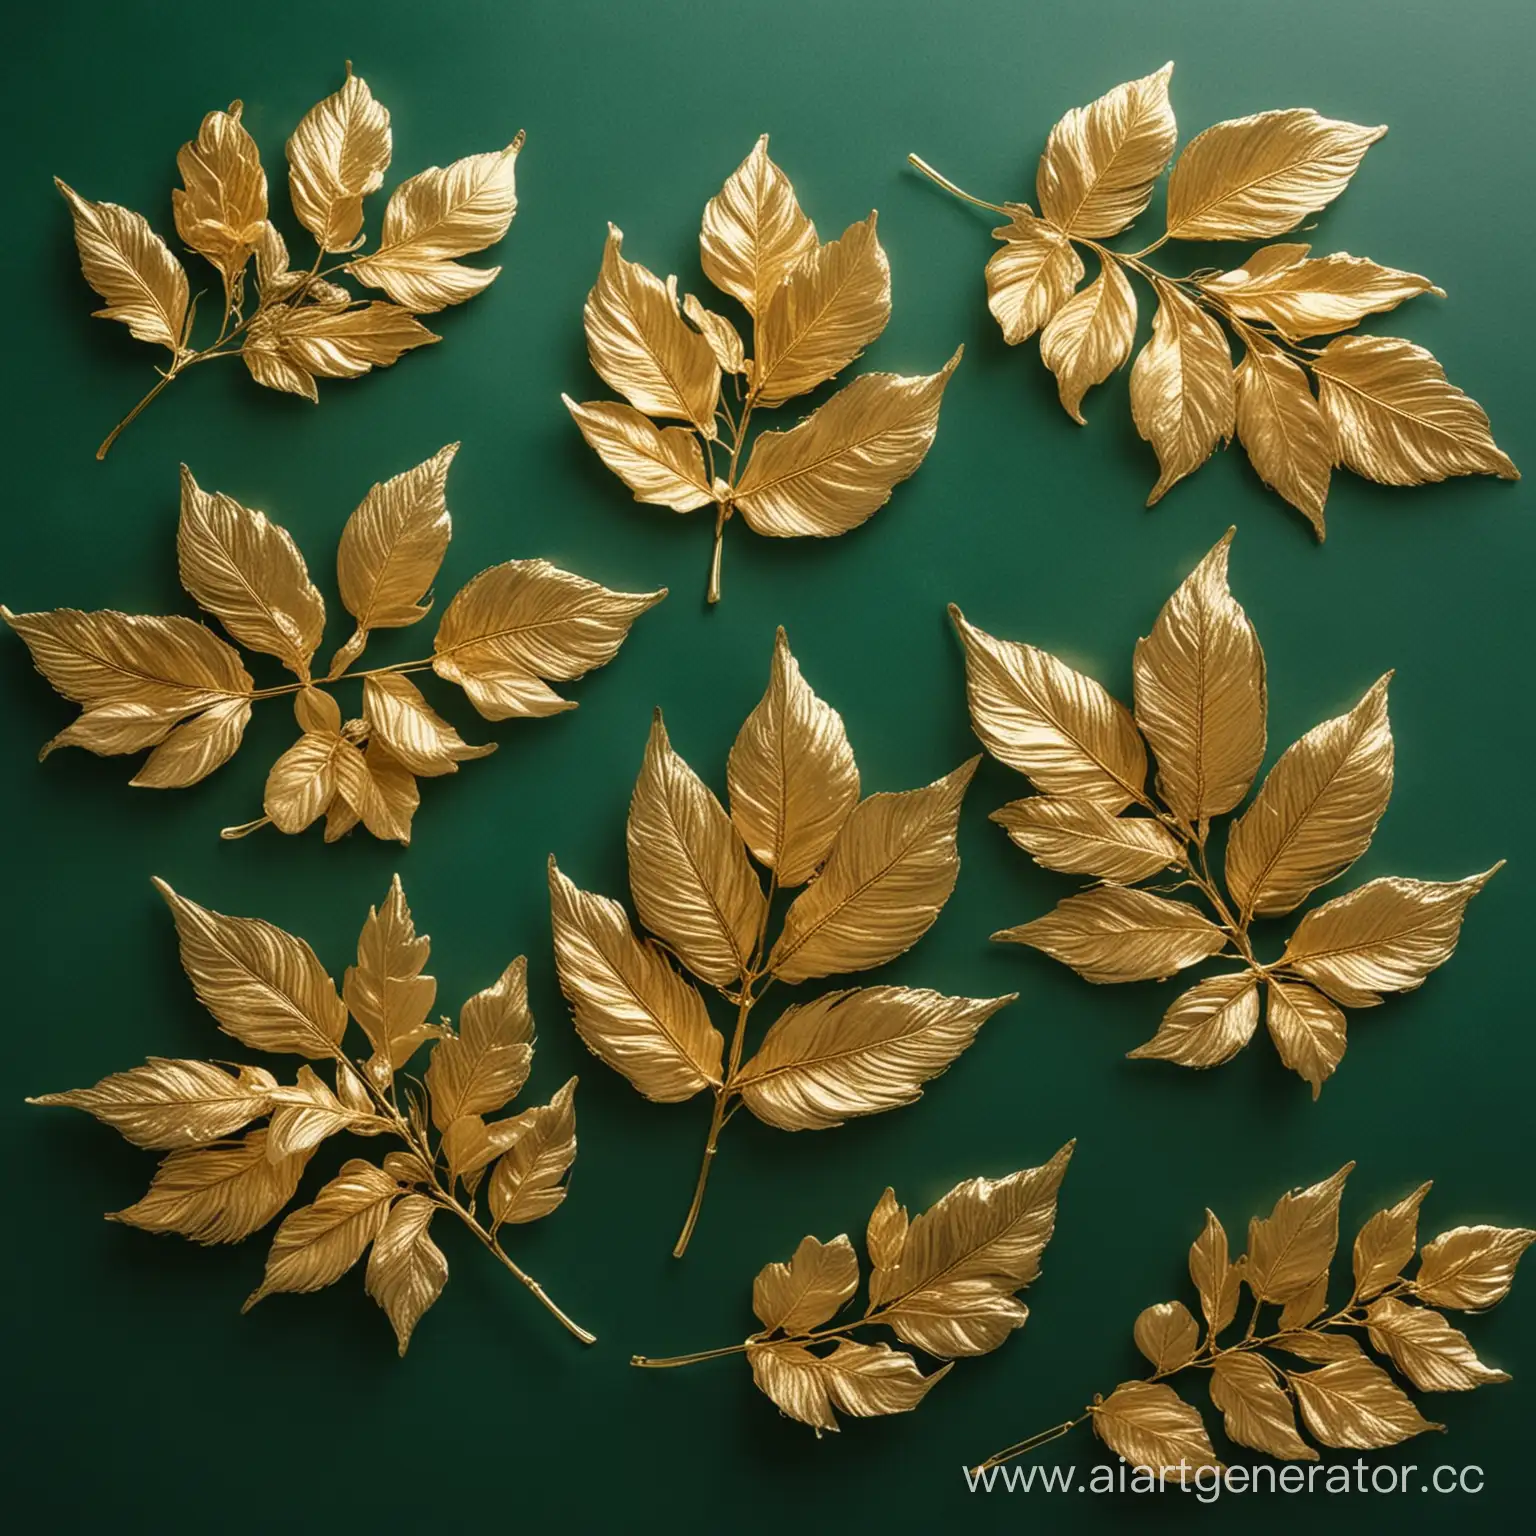 Golden-Leaves-on-Emerald-Green-Background-Lush-Foliage-Nature-Illustration